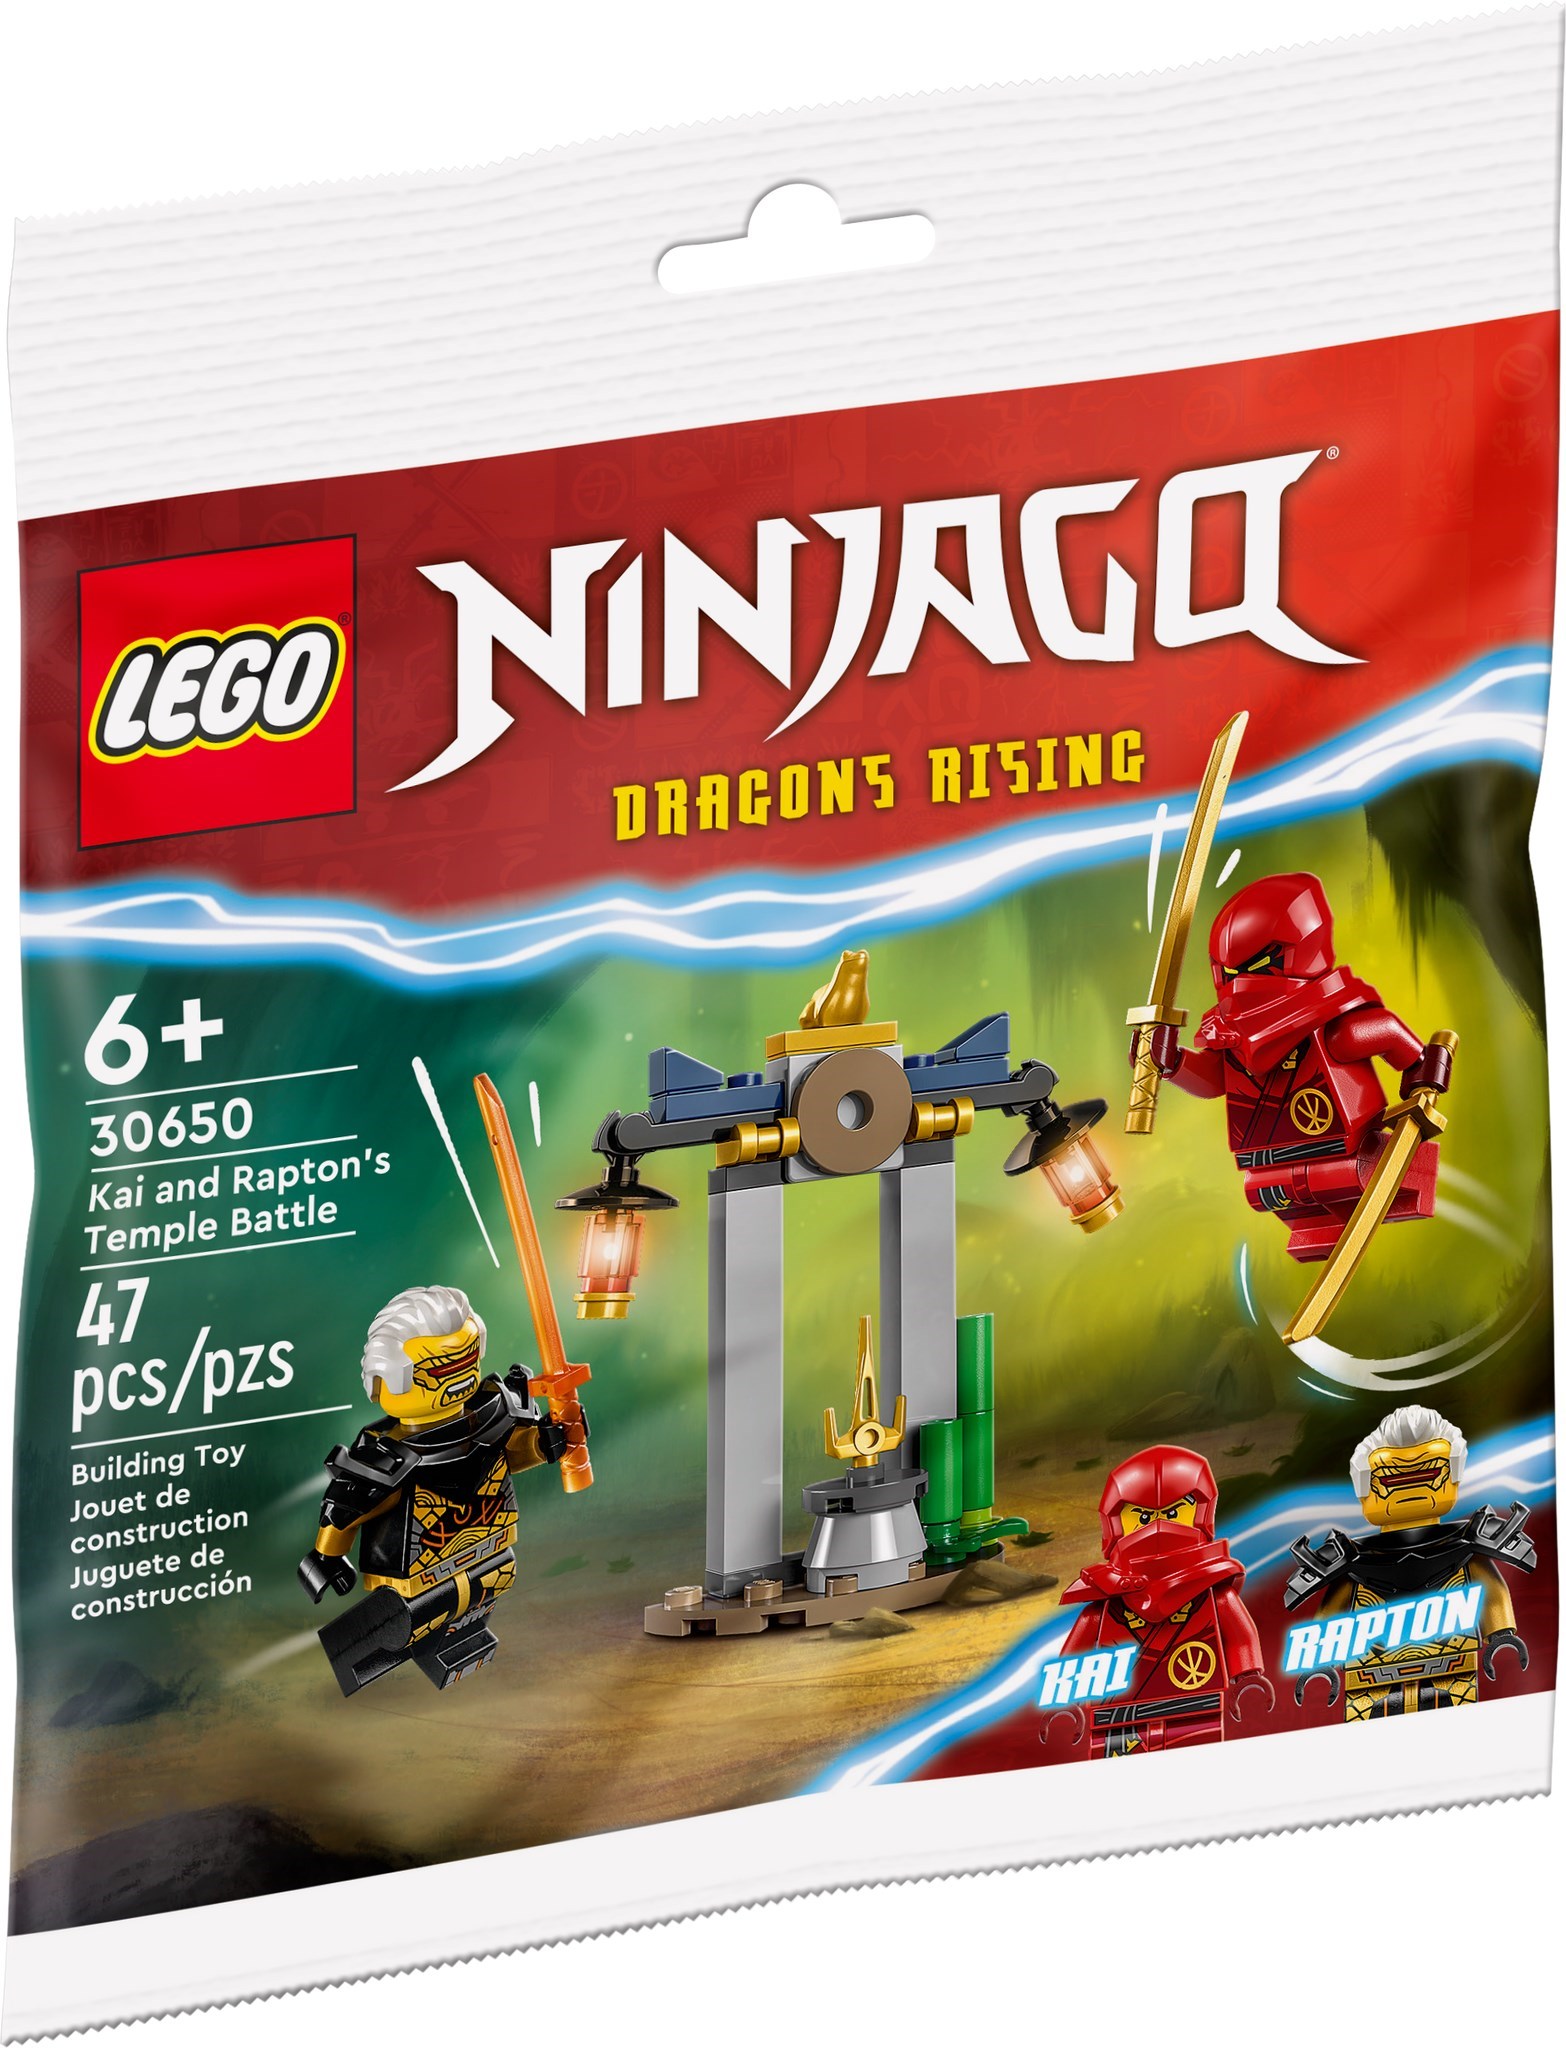 LEGO NINJAGO 2023 book hints at the theme's future